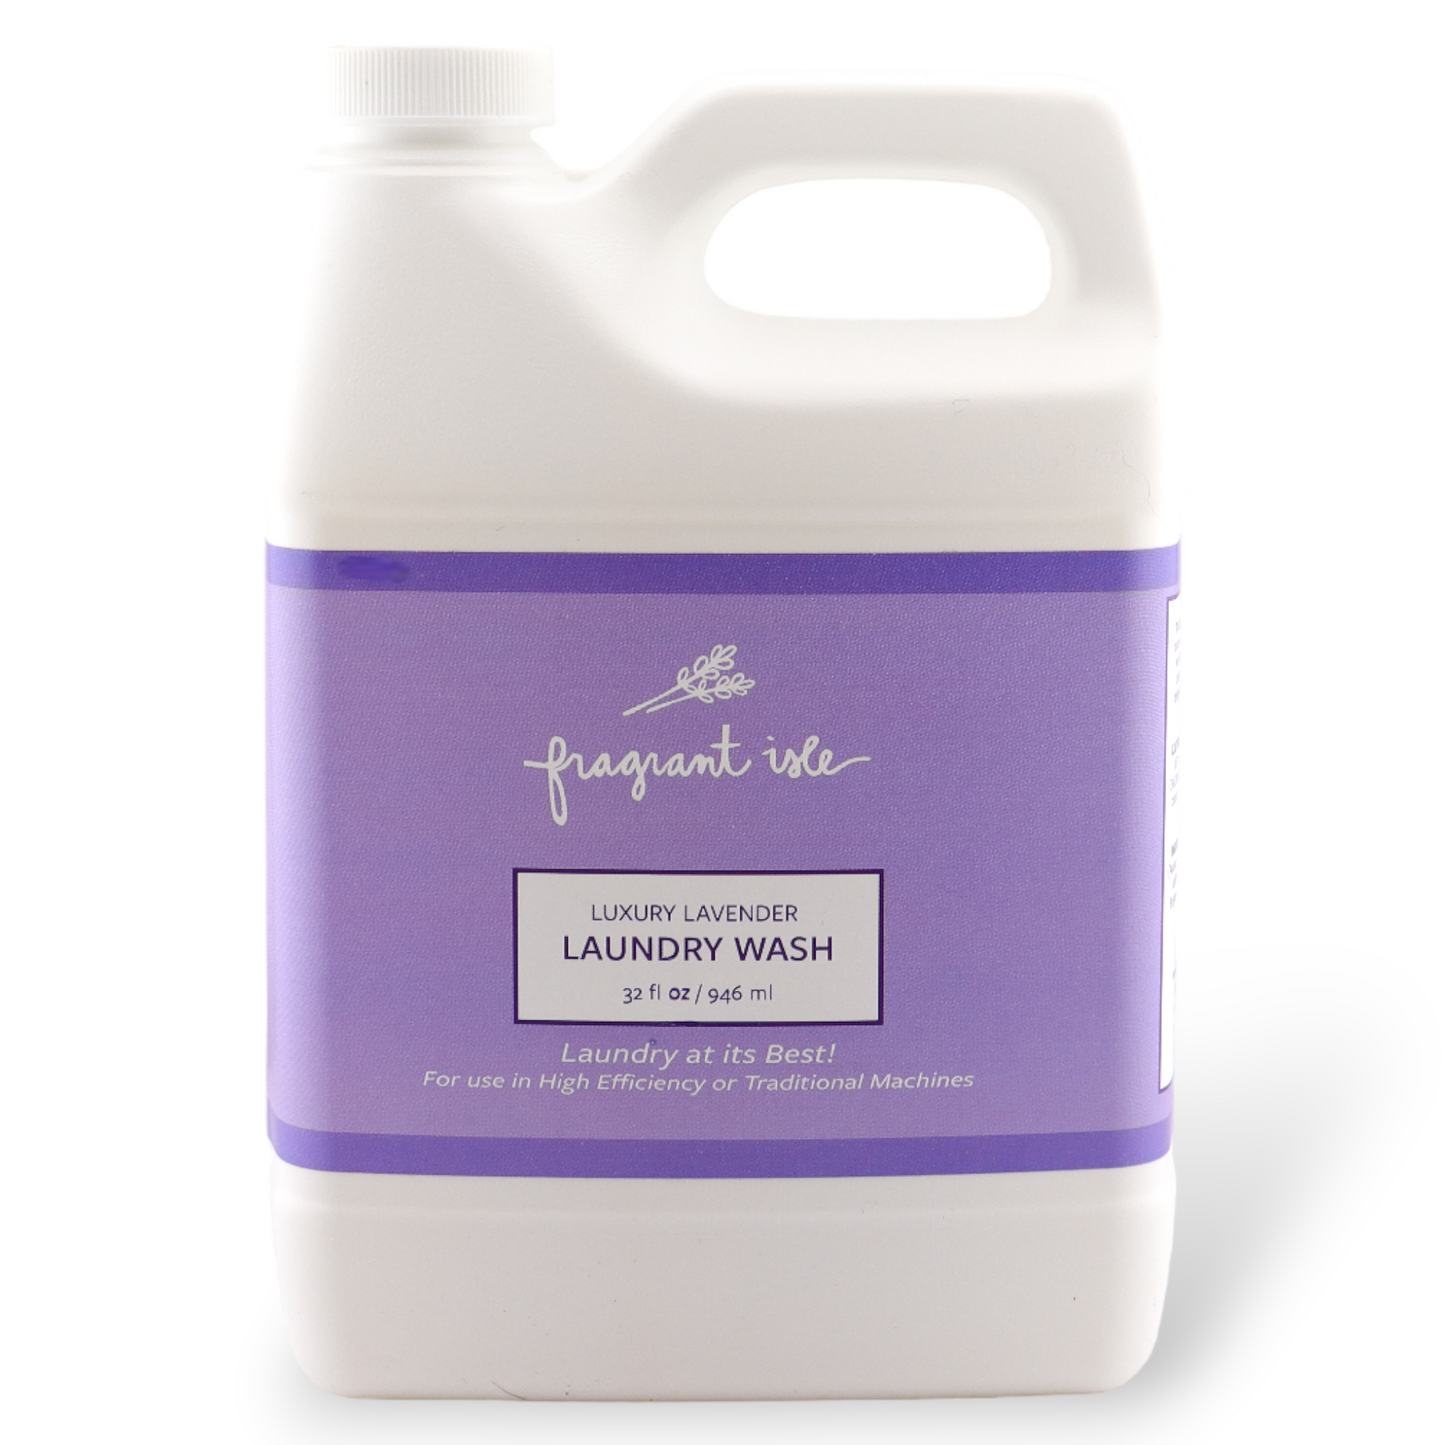 Luxury Lavender Laundry Wash - 32fl oz